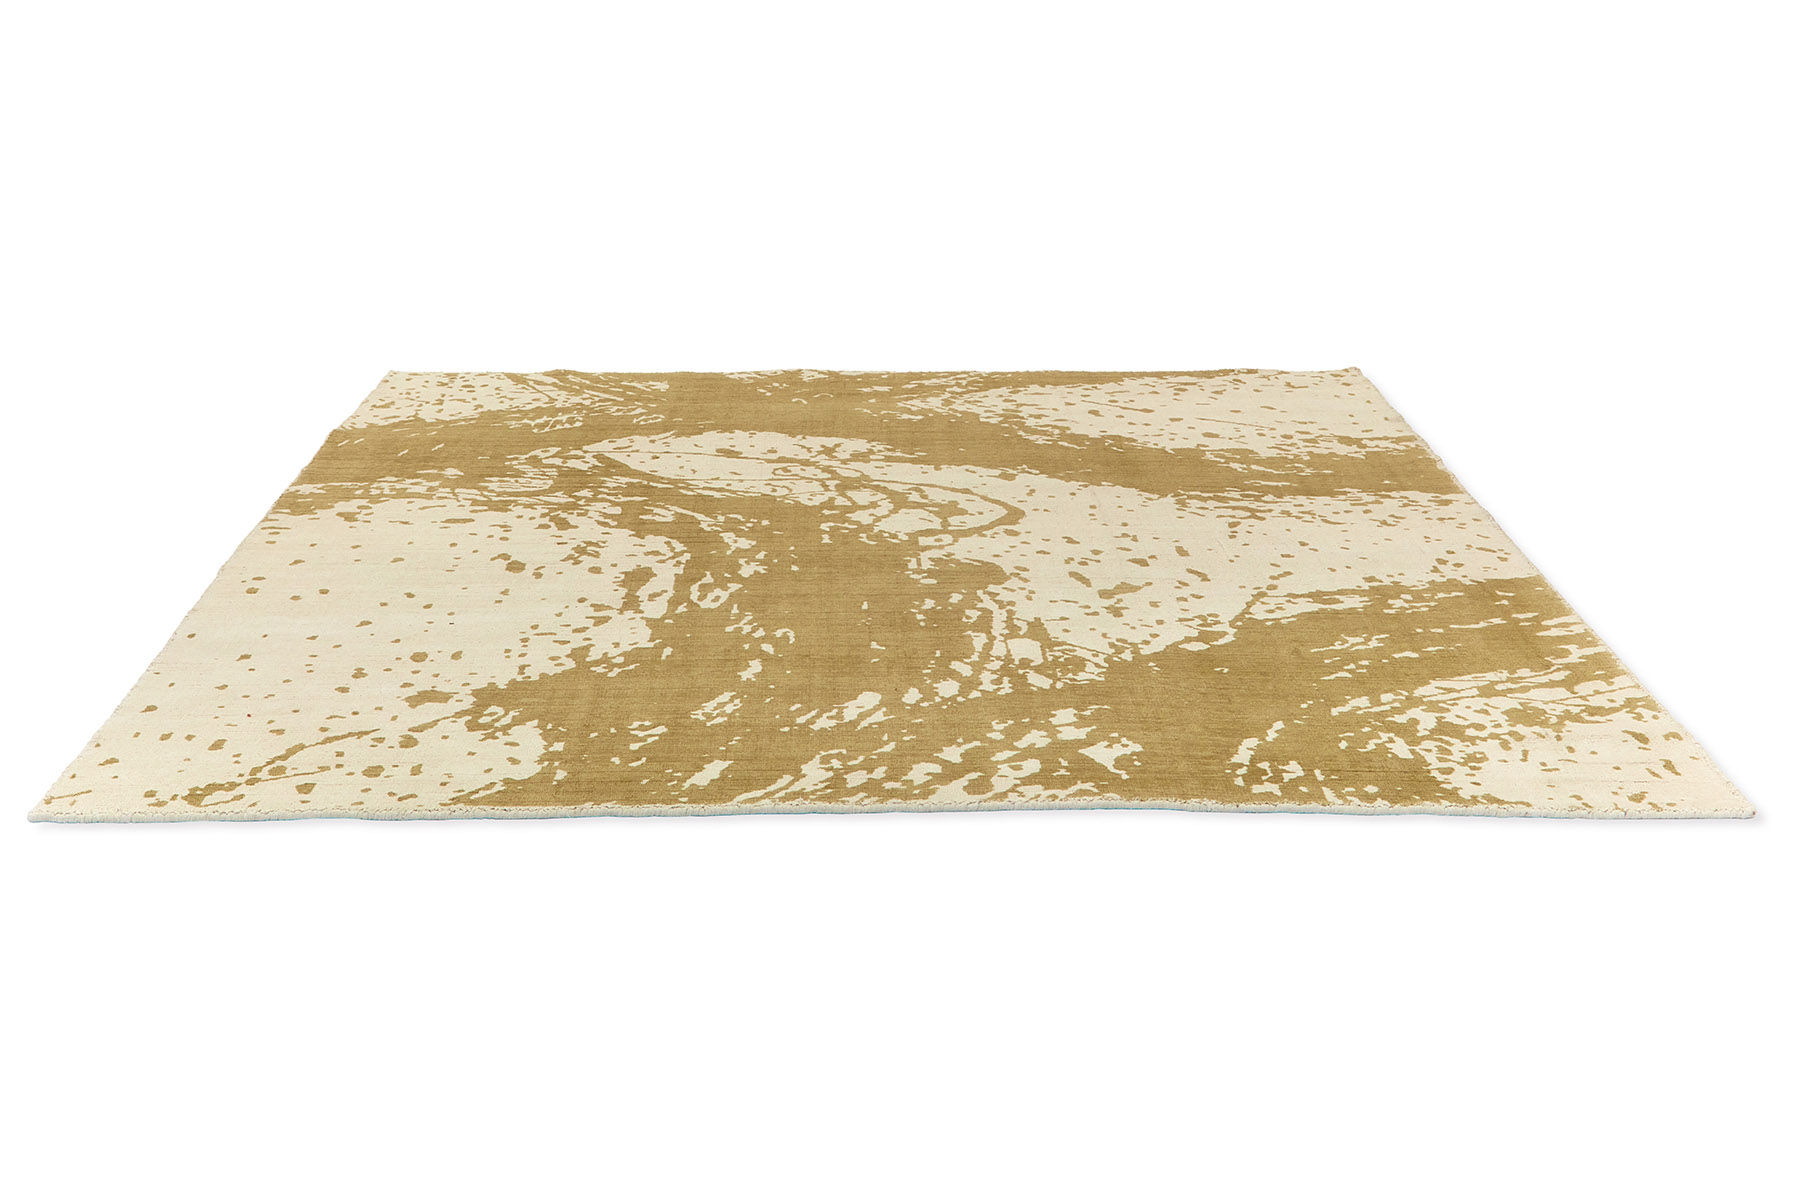 Enigmatic Sahara Awakening Rug ☞ Size: 140 x 200 cm